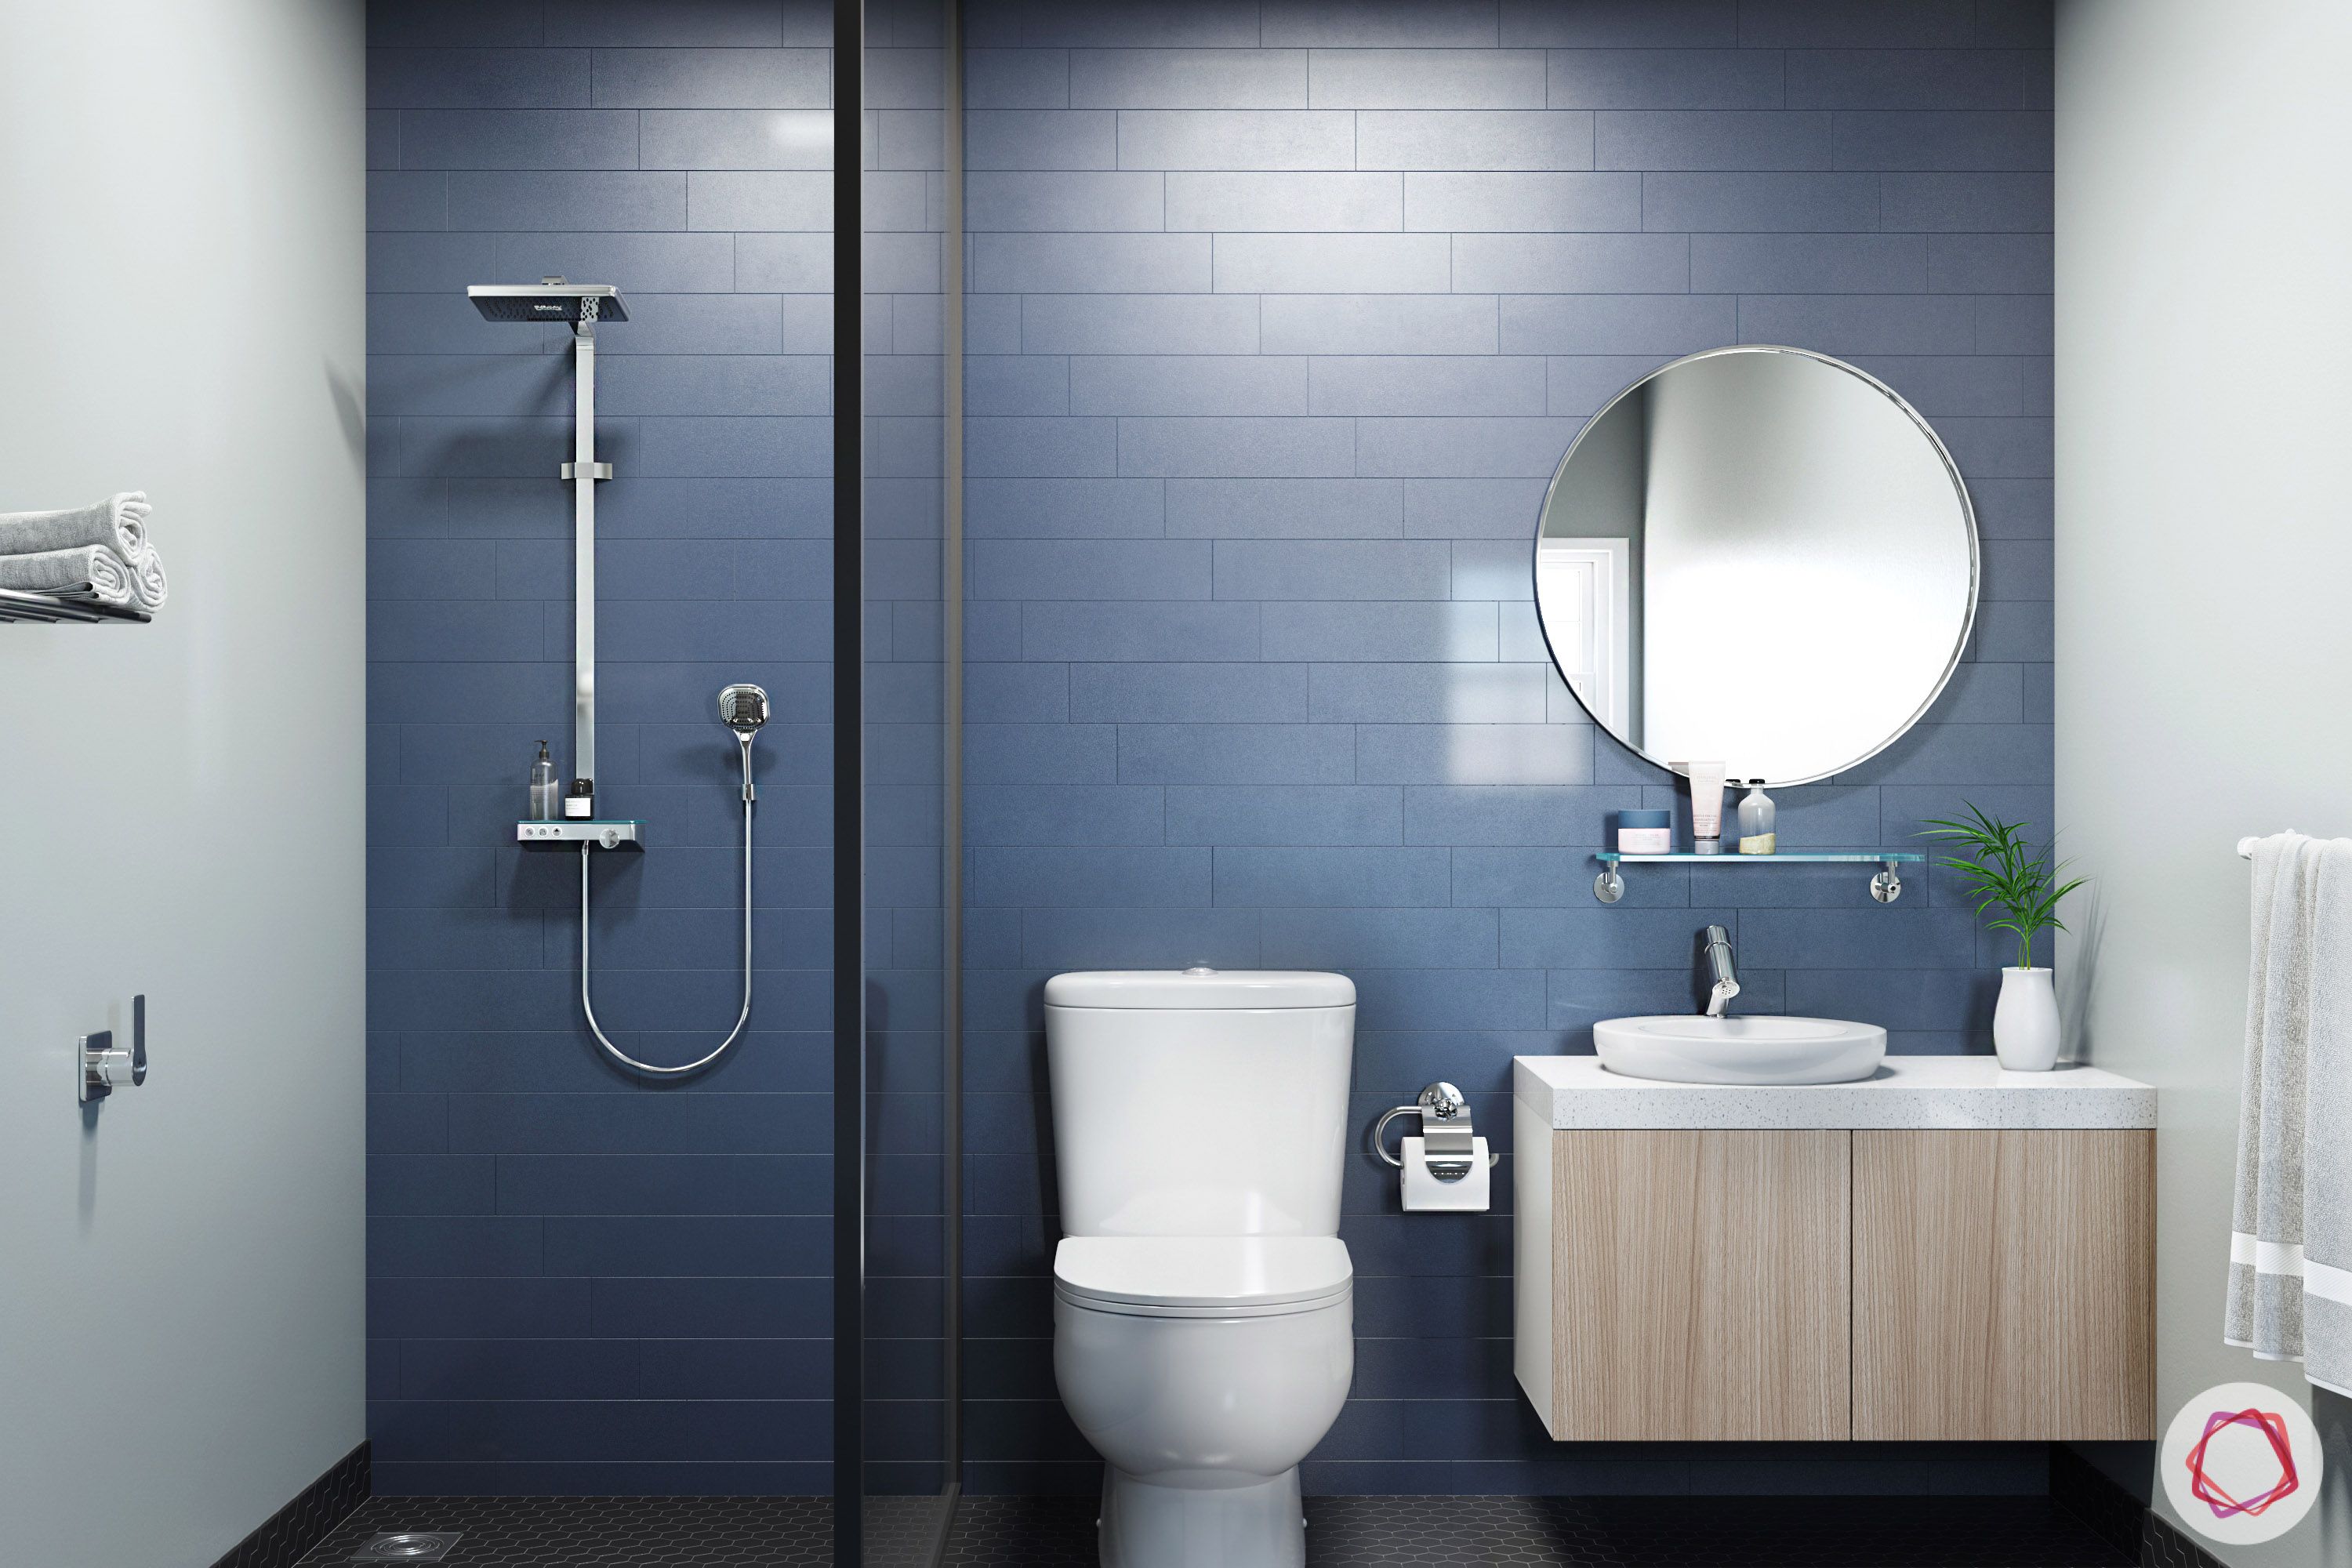 bathroom-colors-blue-grey-brick-tiles-mirror-vanity-storage